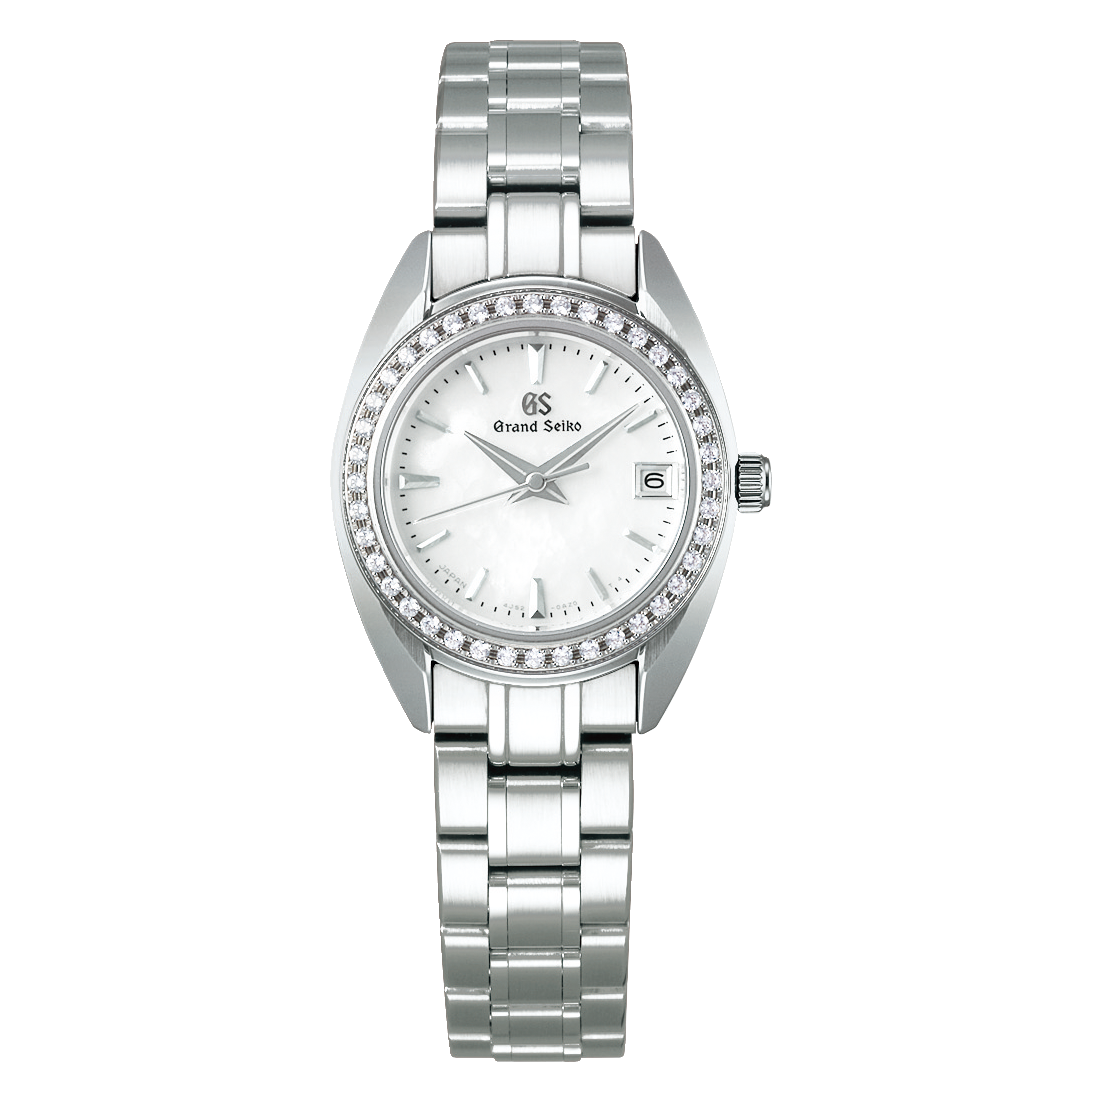 Grand Seiko Elegance Collection STGF279 Battery-powered quartz watch - IPPO JAPAN WATCH 